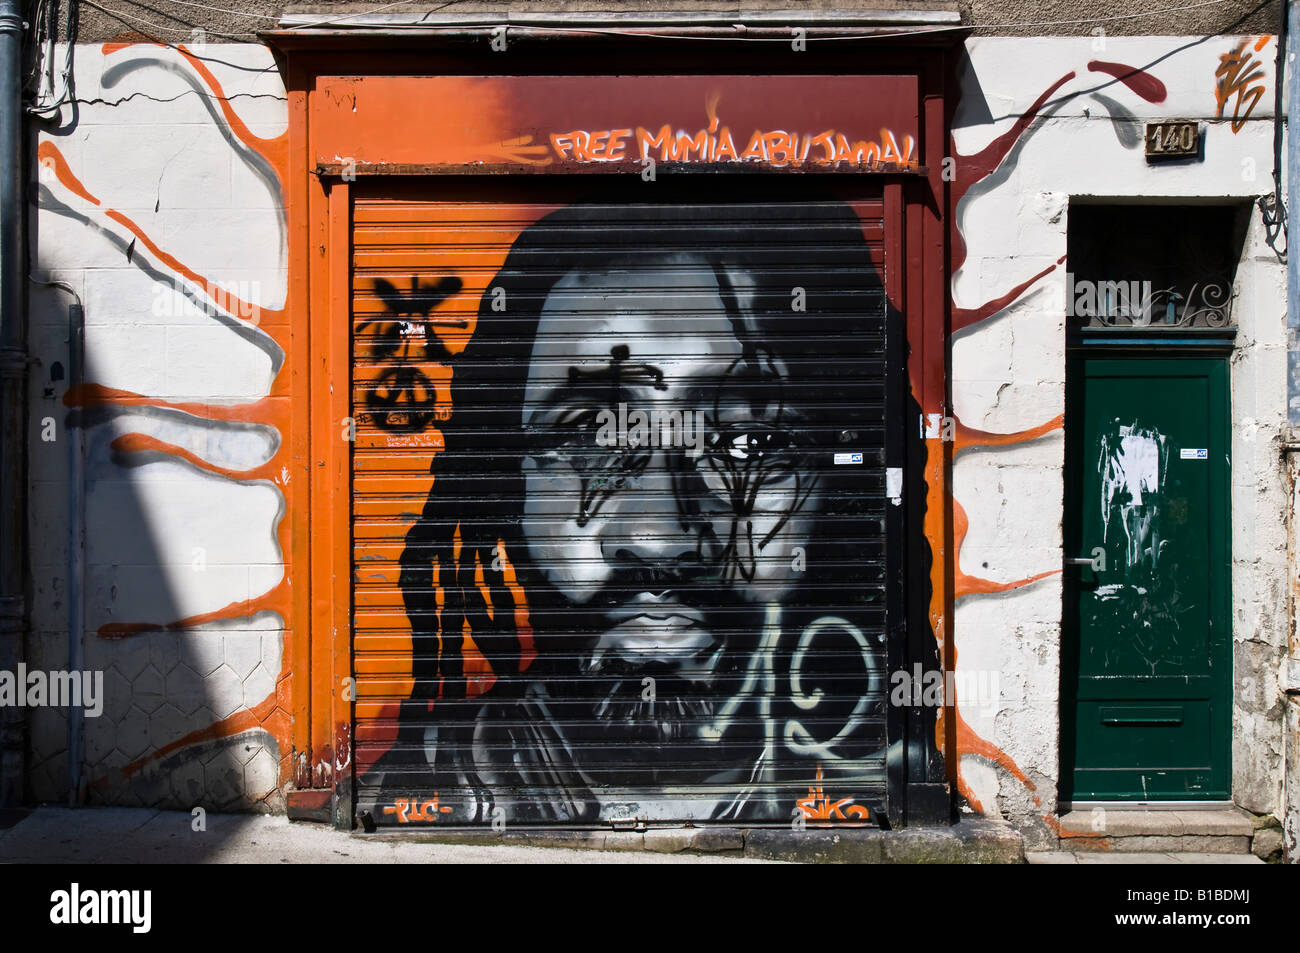 Graffiti mural sprayed onto shop window shutter, Poitiers, Vienne, France  Stock Photo - Alamy